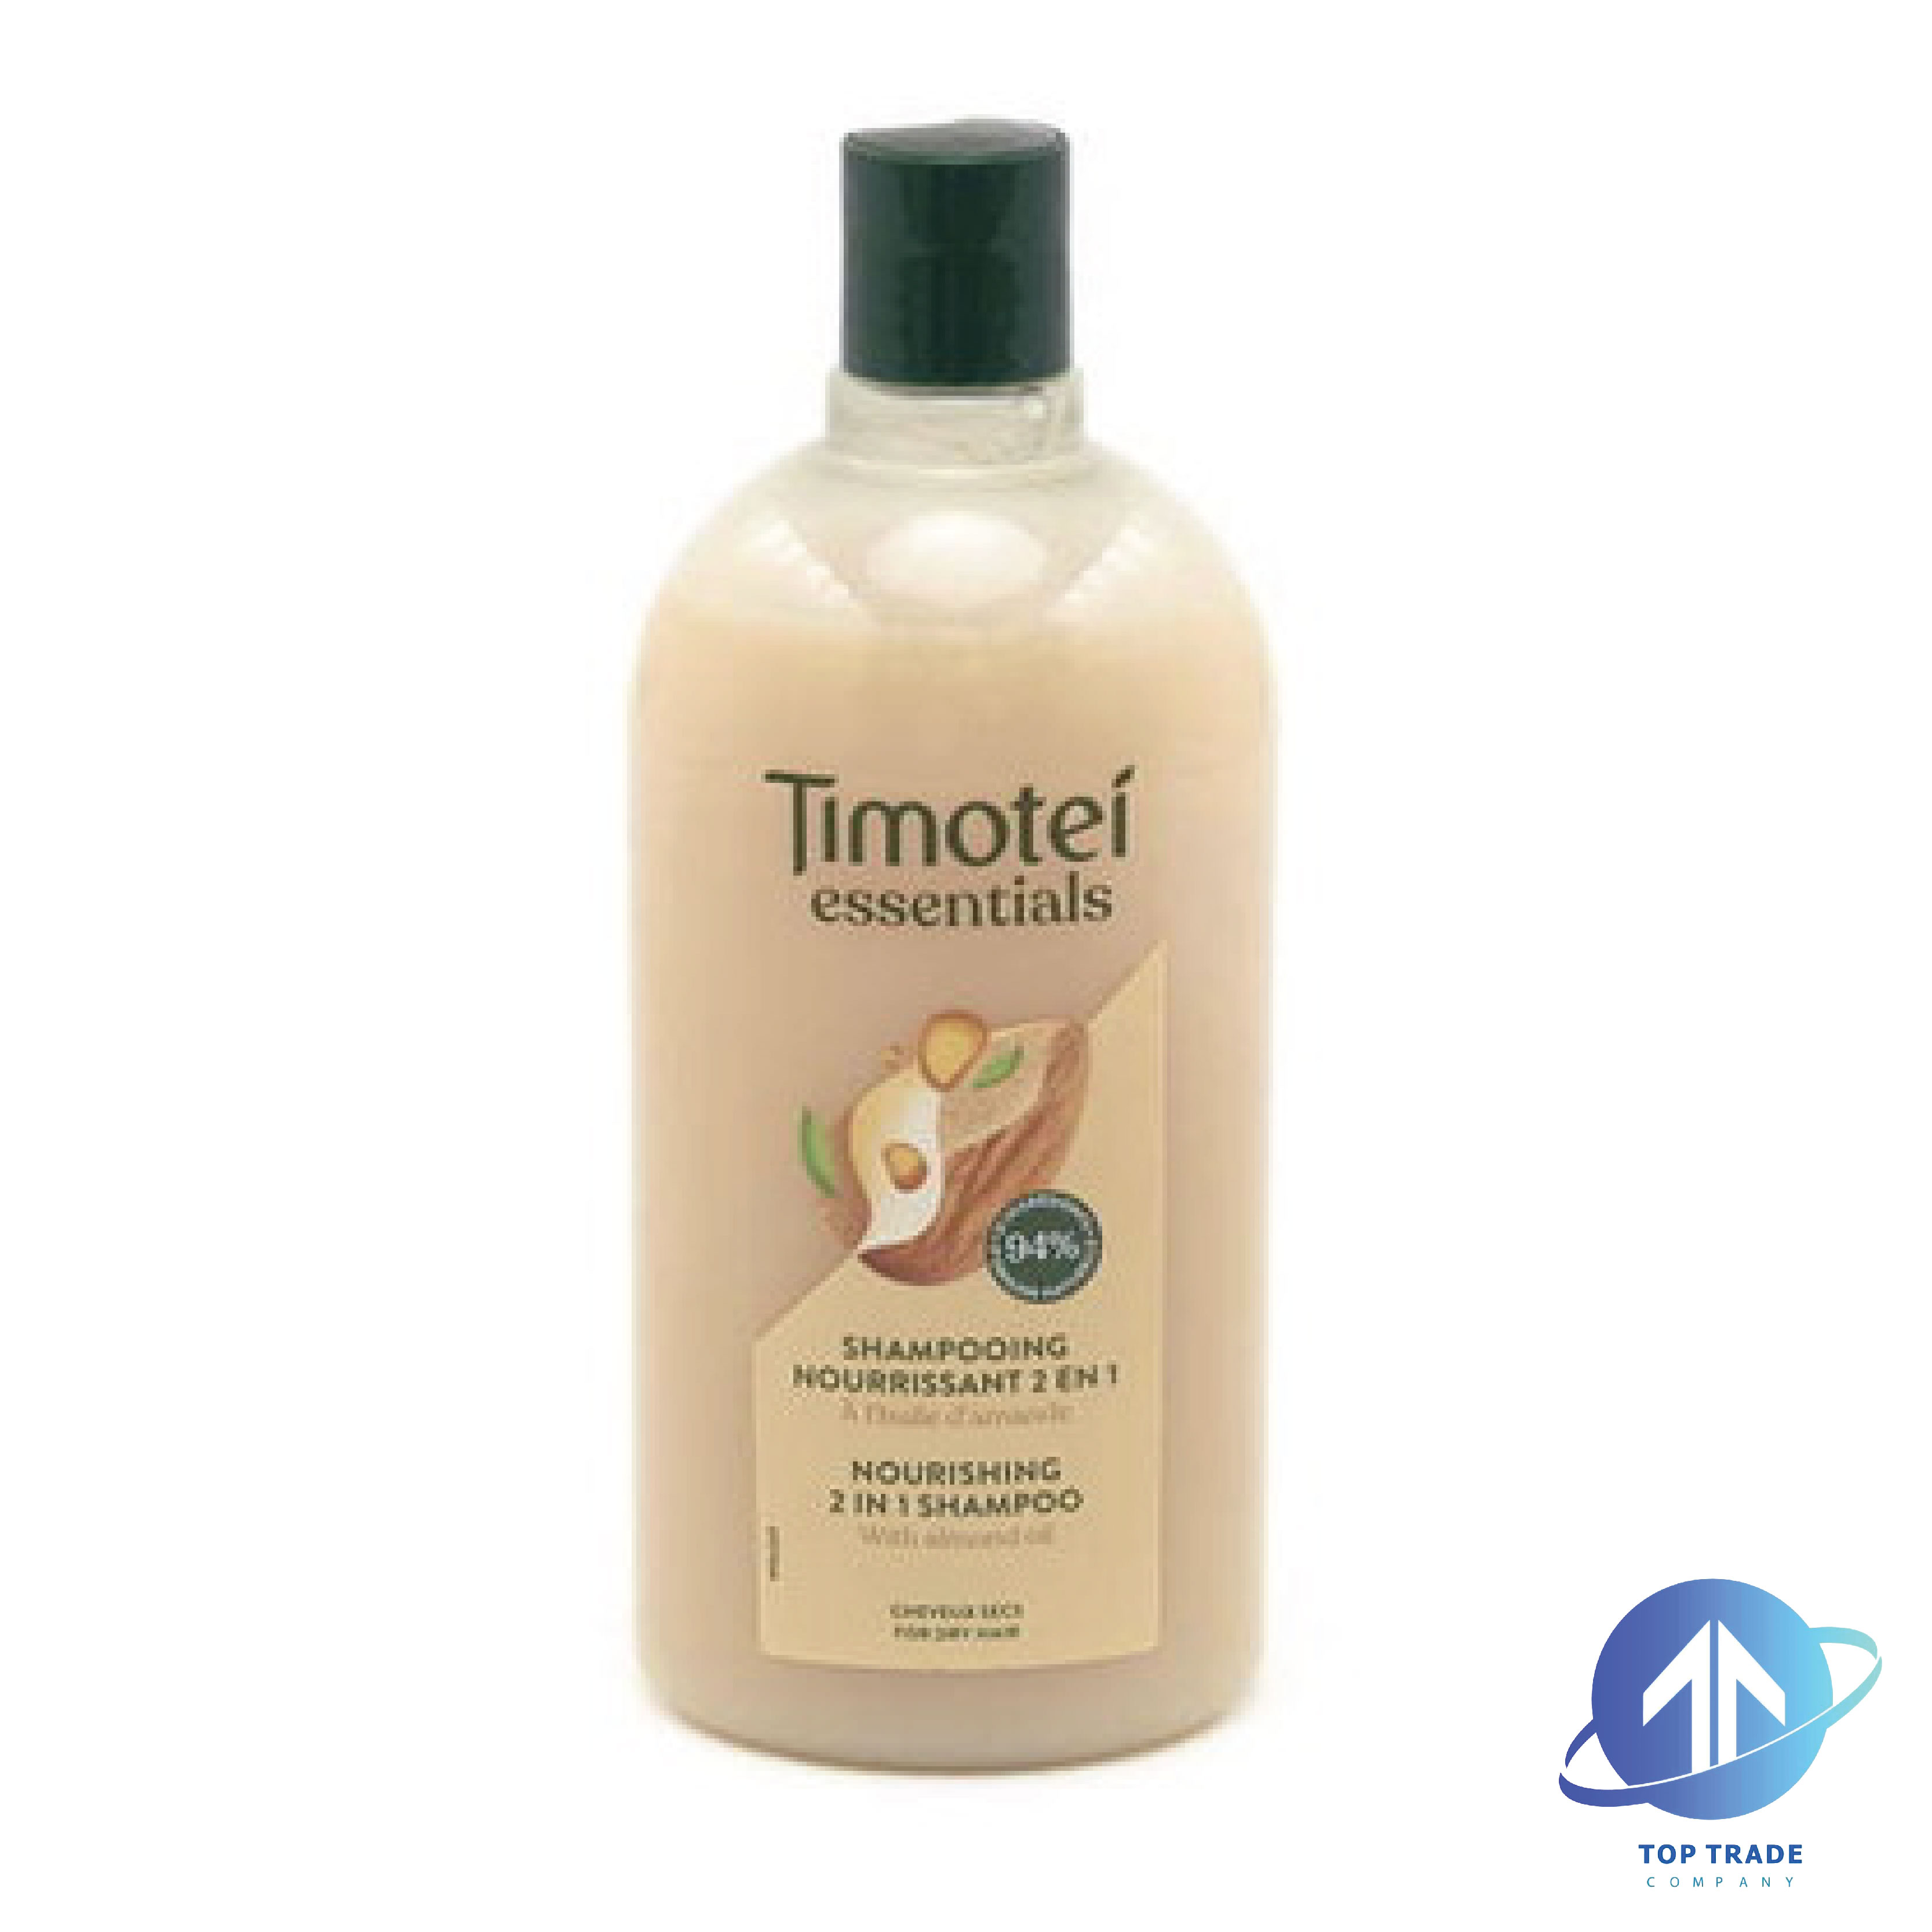 Timotei 2 in 1 shampoo Nourishing with almond oil 750ml